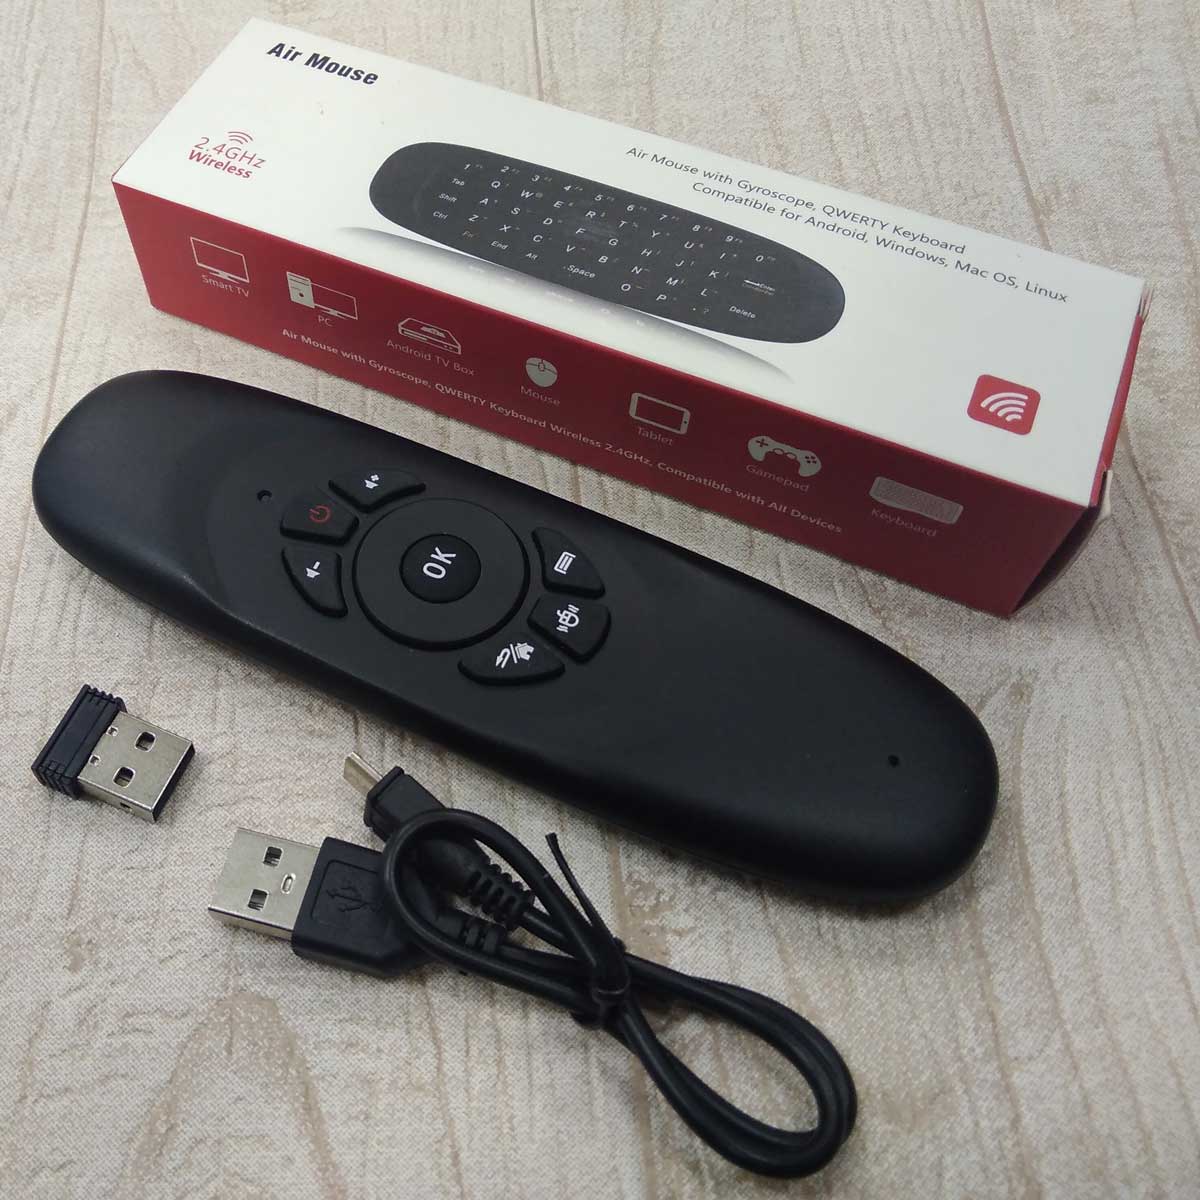 DVS AM-100 беспроводная клавиатура / мышь RU для android TV, Air Mouse & Wireless Keyboard.